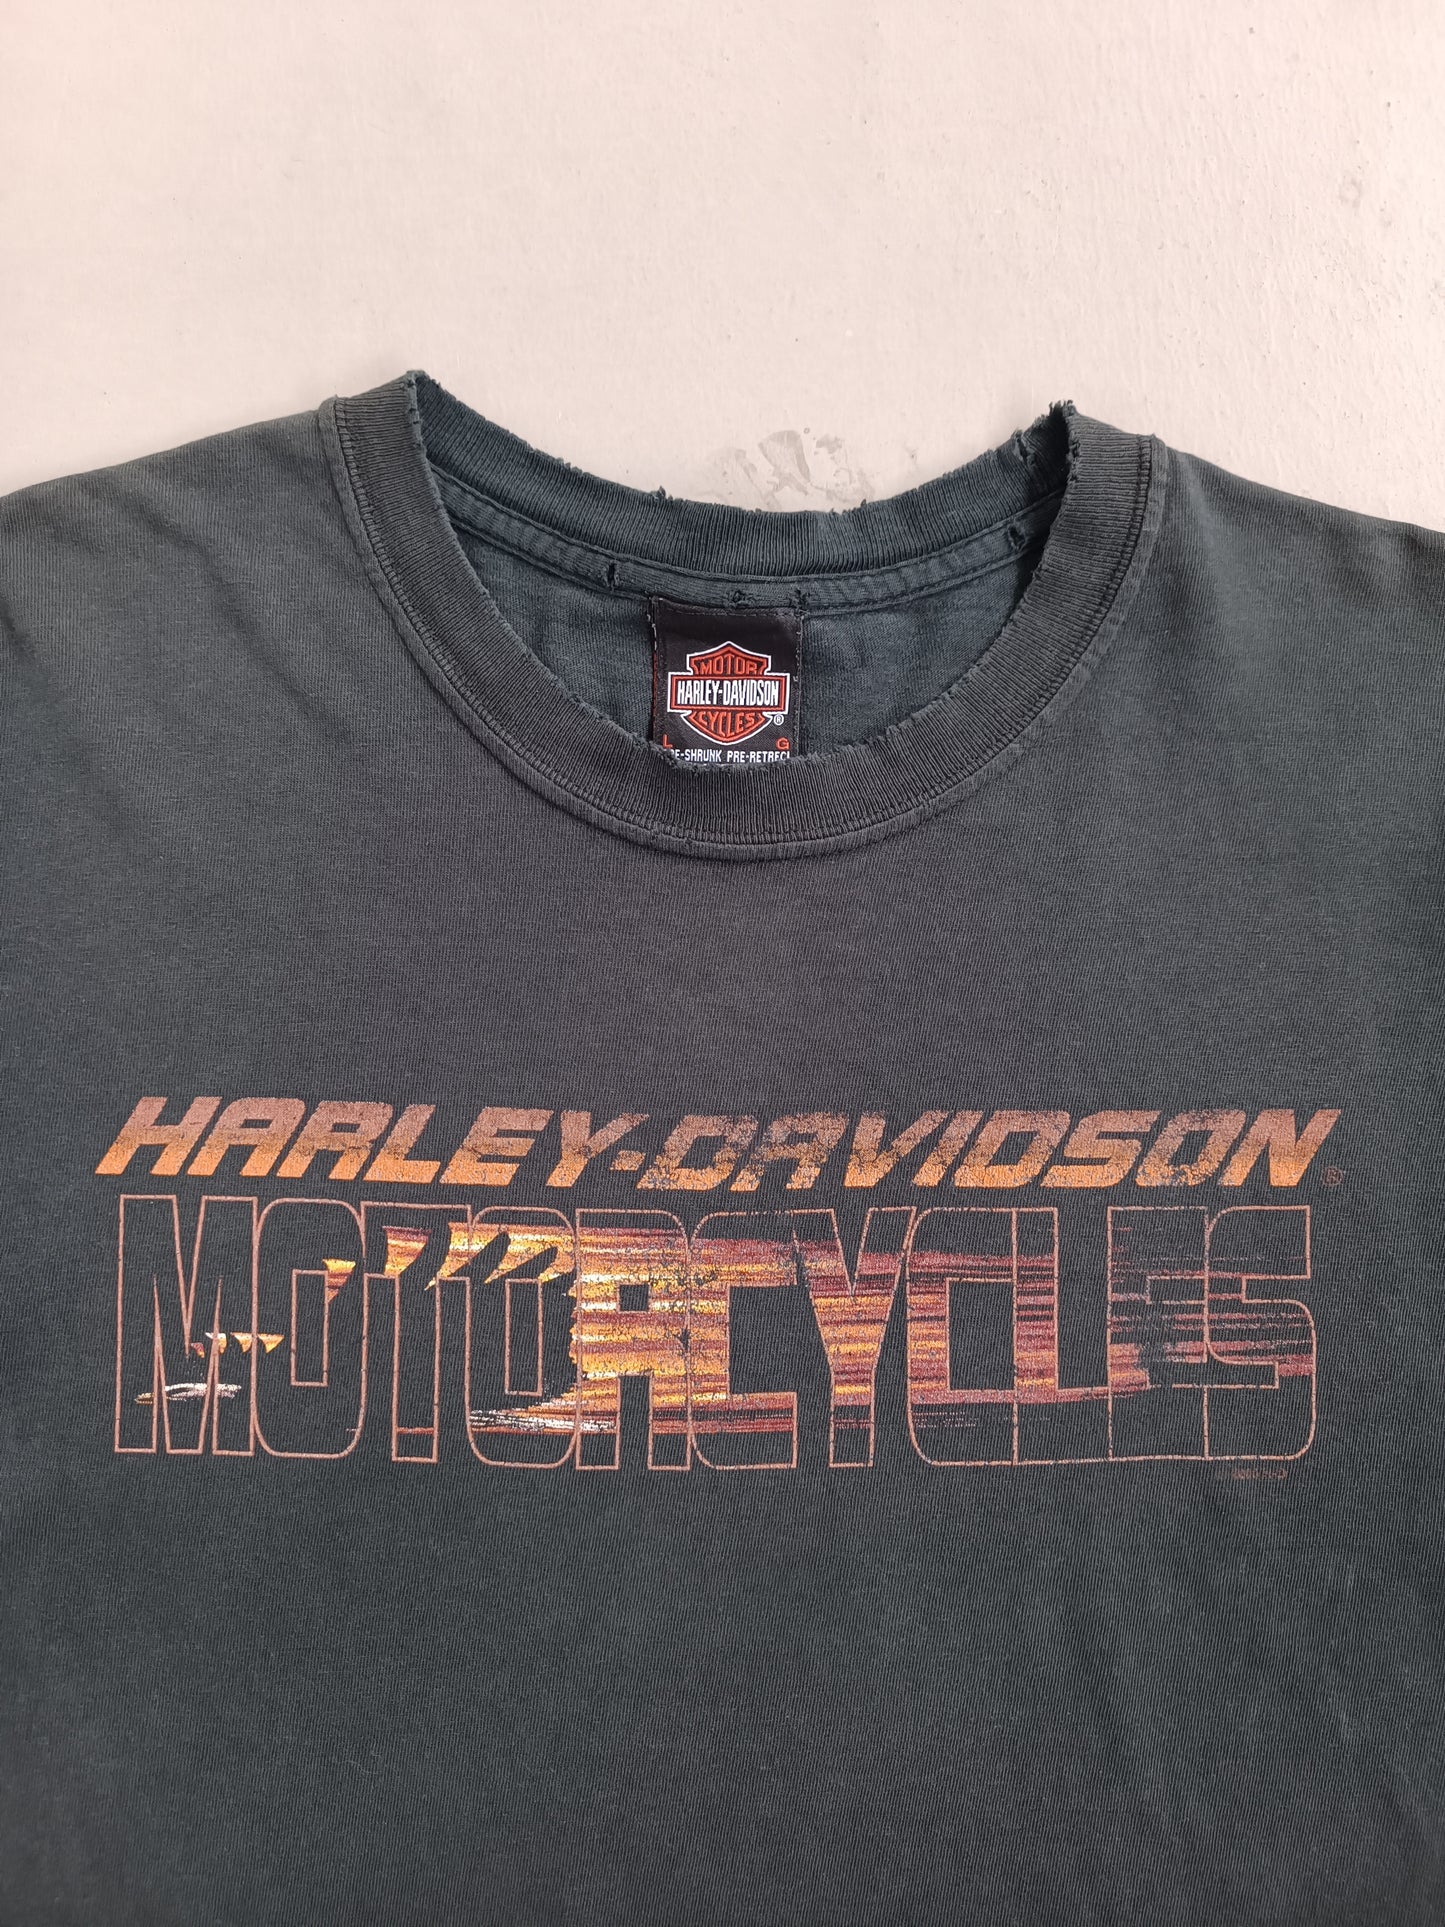 Harley Davidson Canada - L